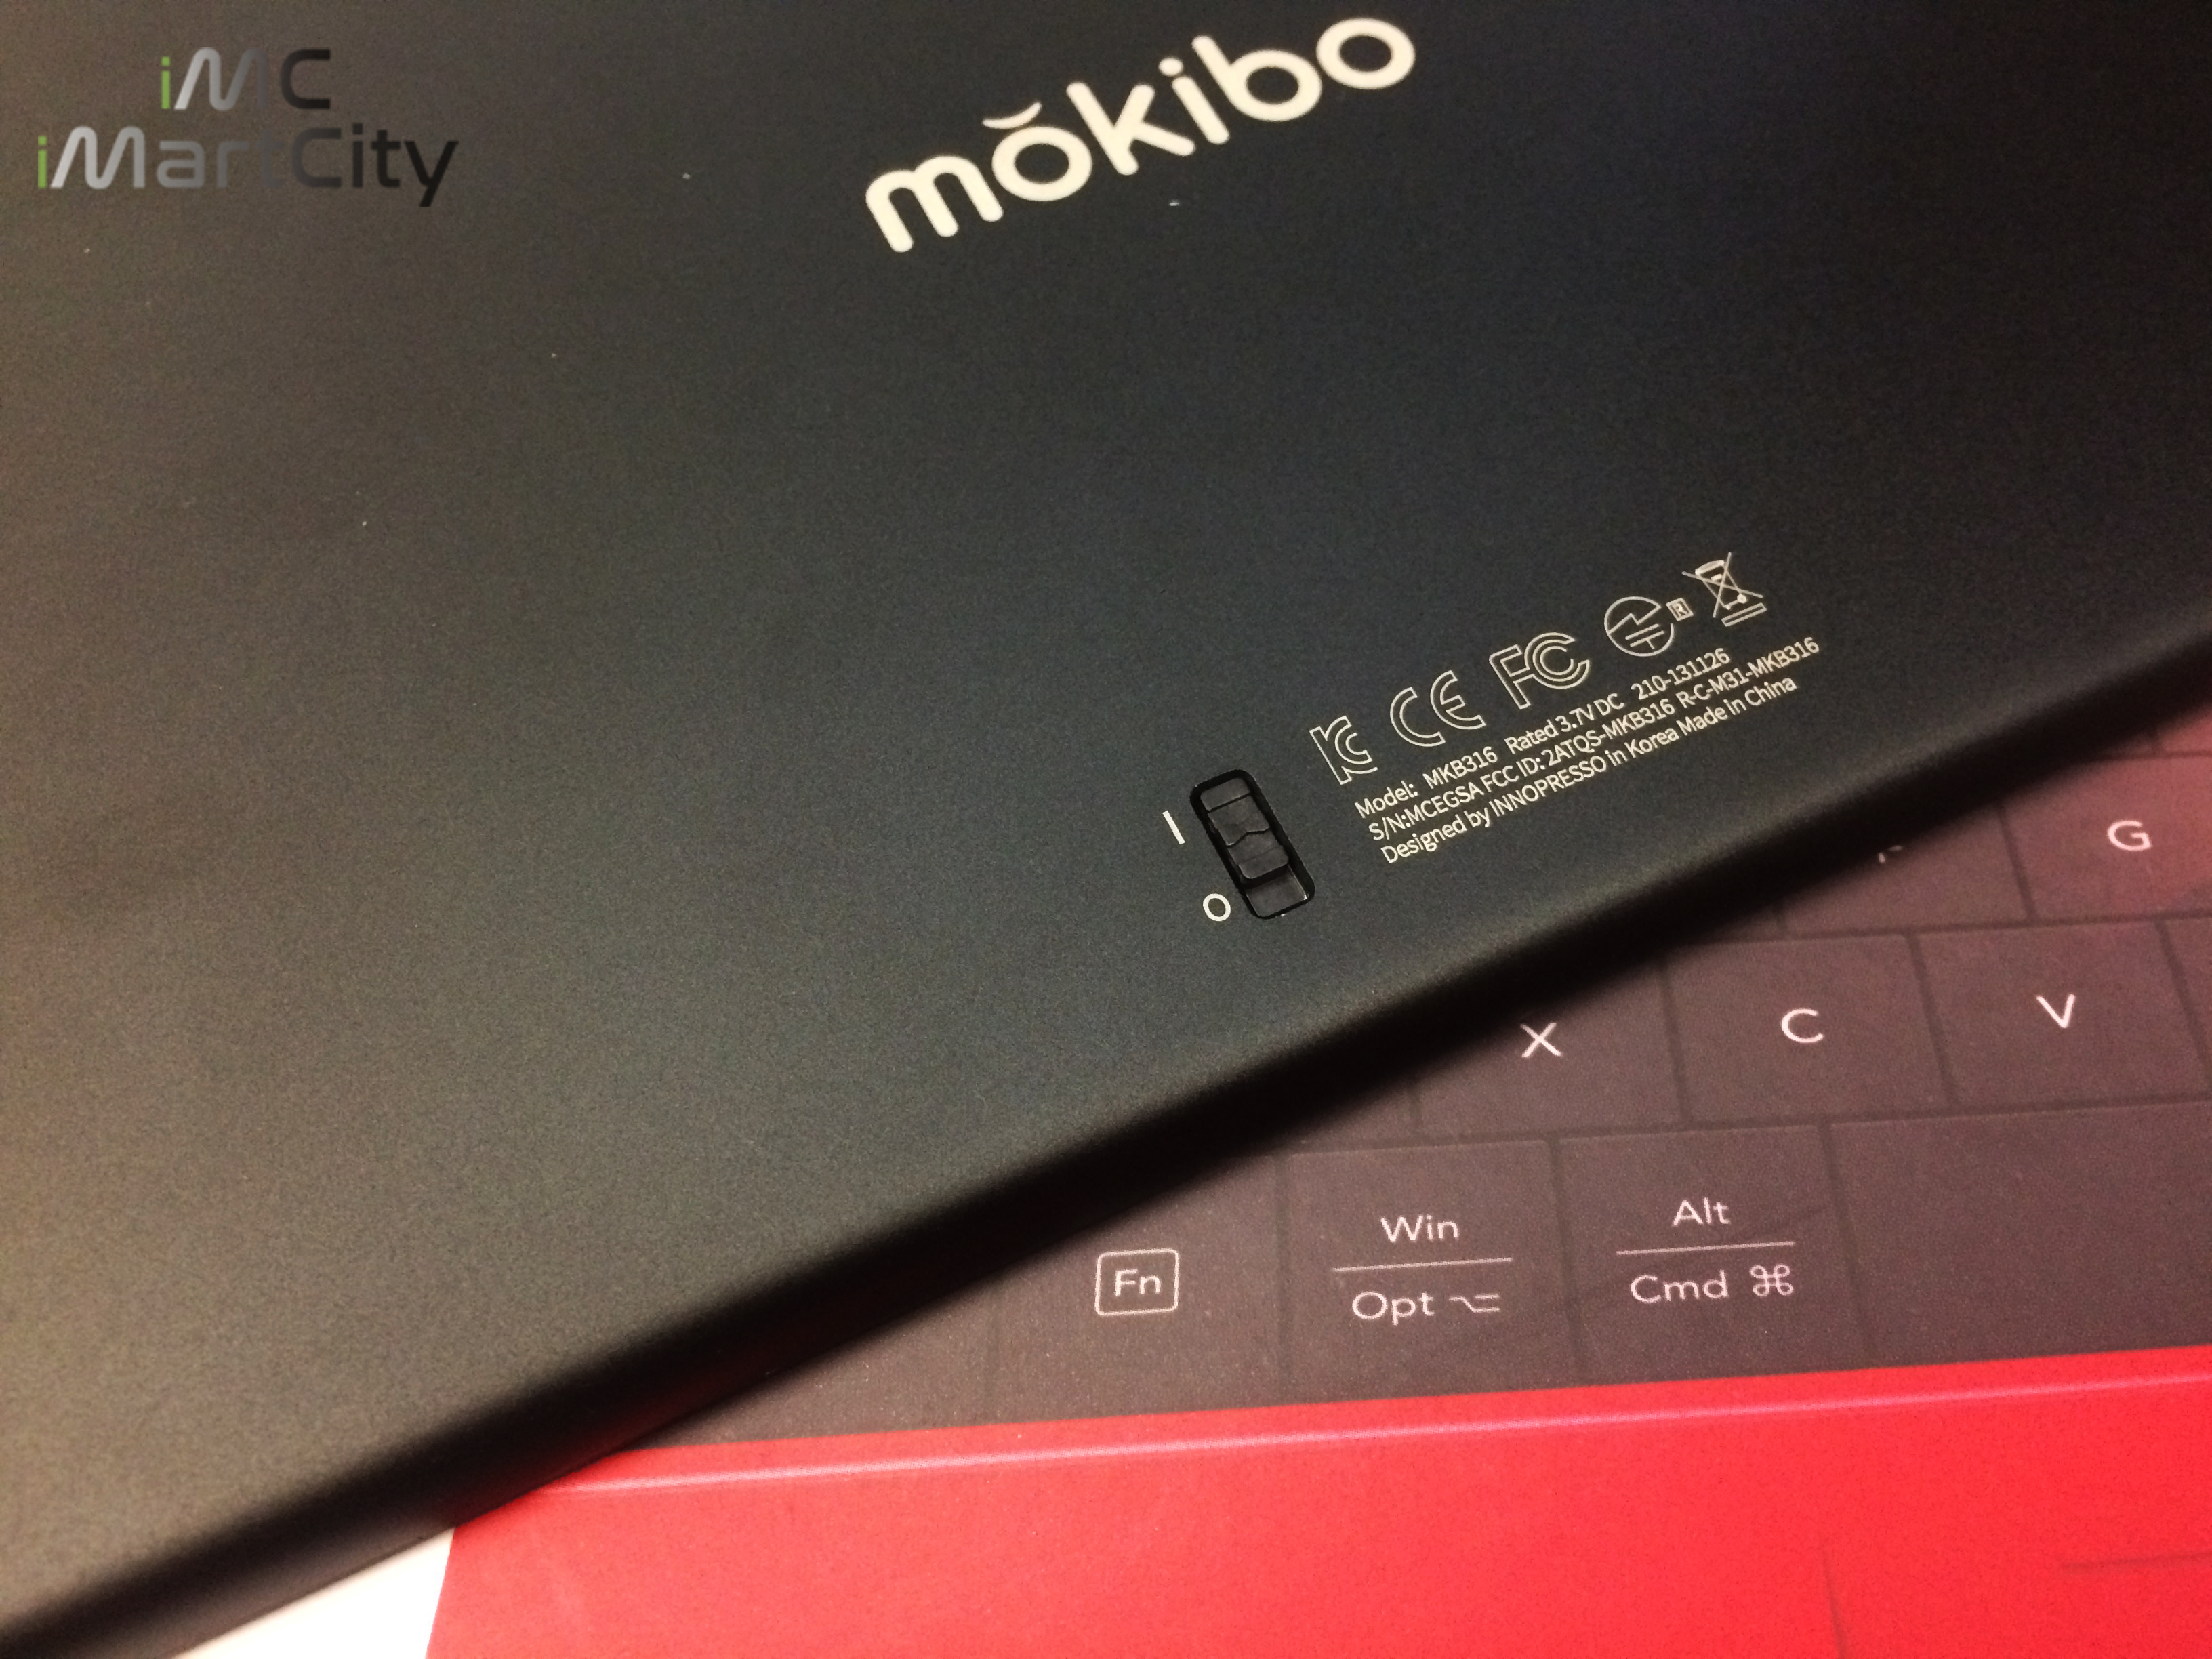 lexuma-mokibo-touchpad-keyboard-bluetooth-wireless-pantograph-laptop-black-back